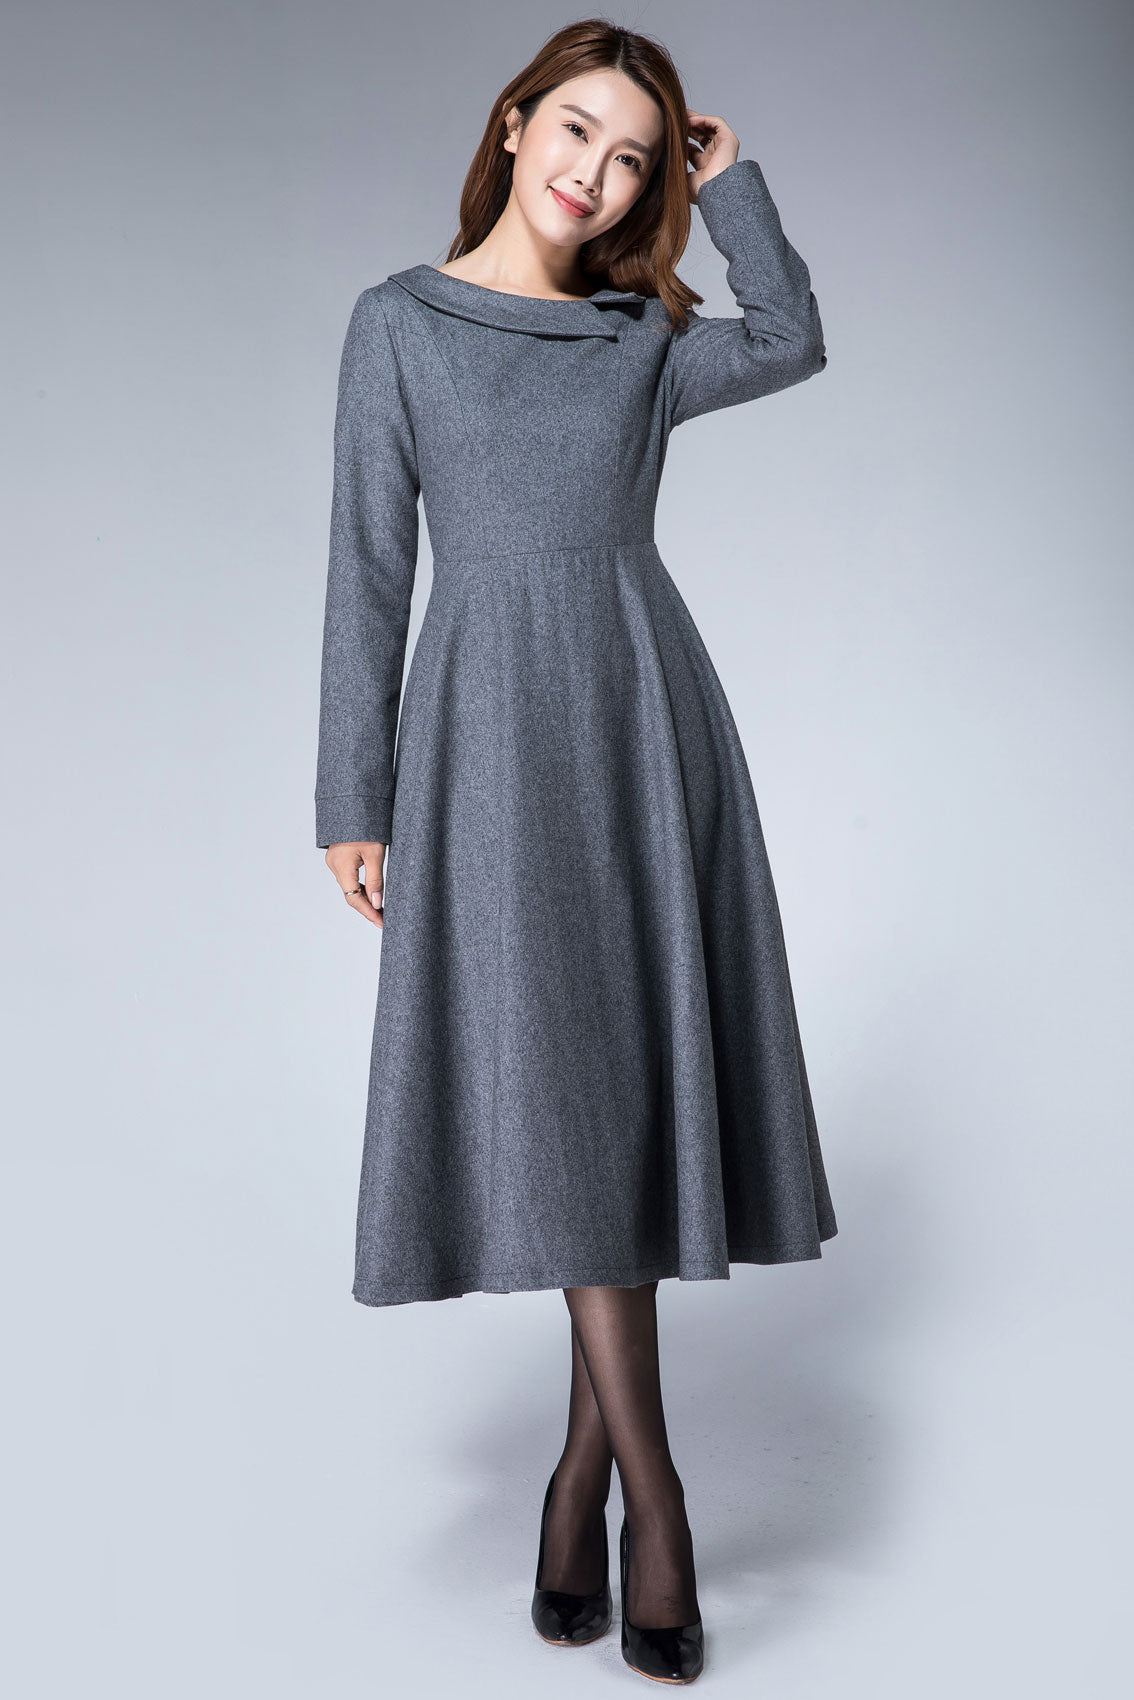 vintage inspired wool maxi dress 1611#